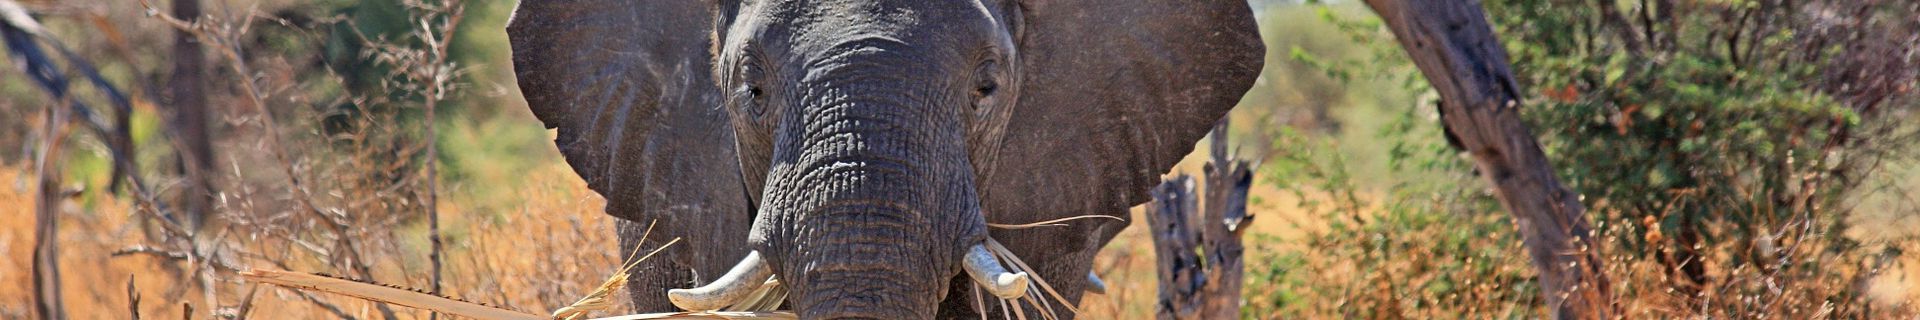 Elefant Nationalpark Safari Tansania